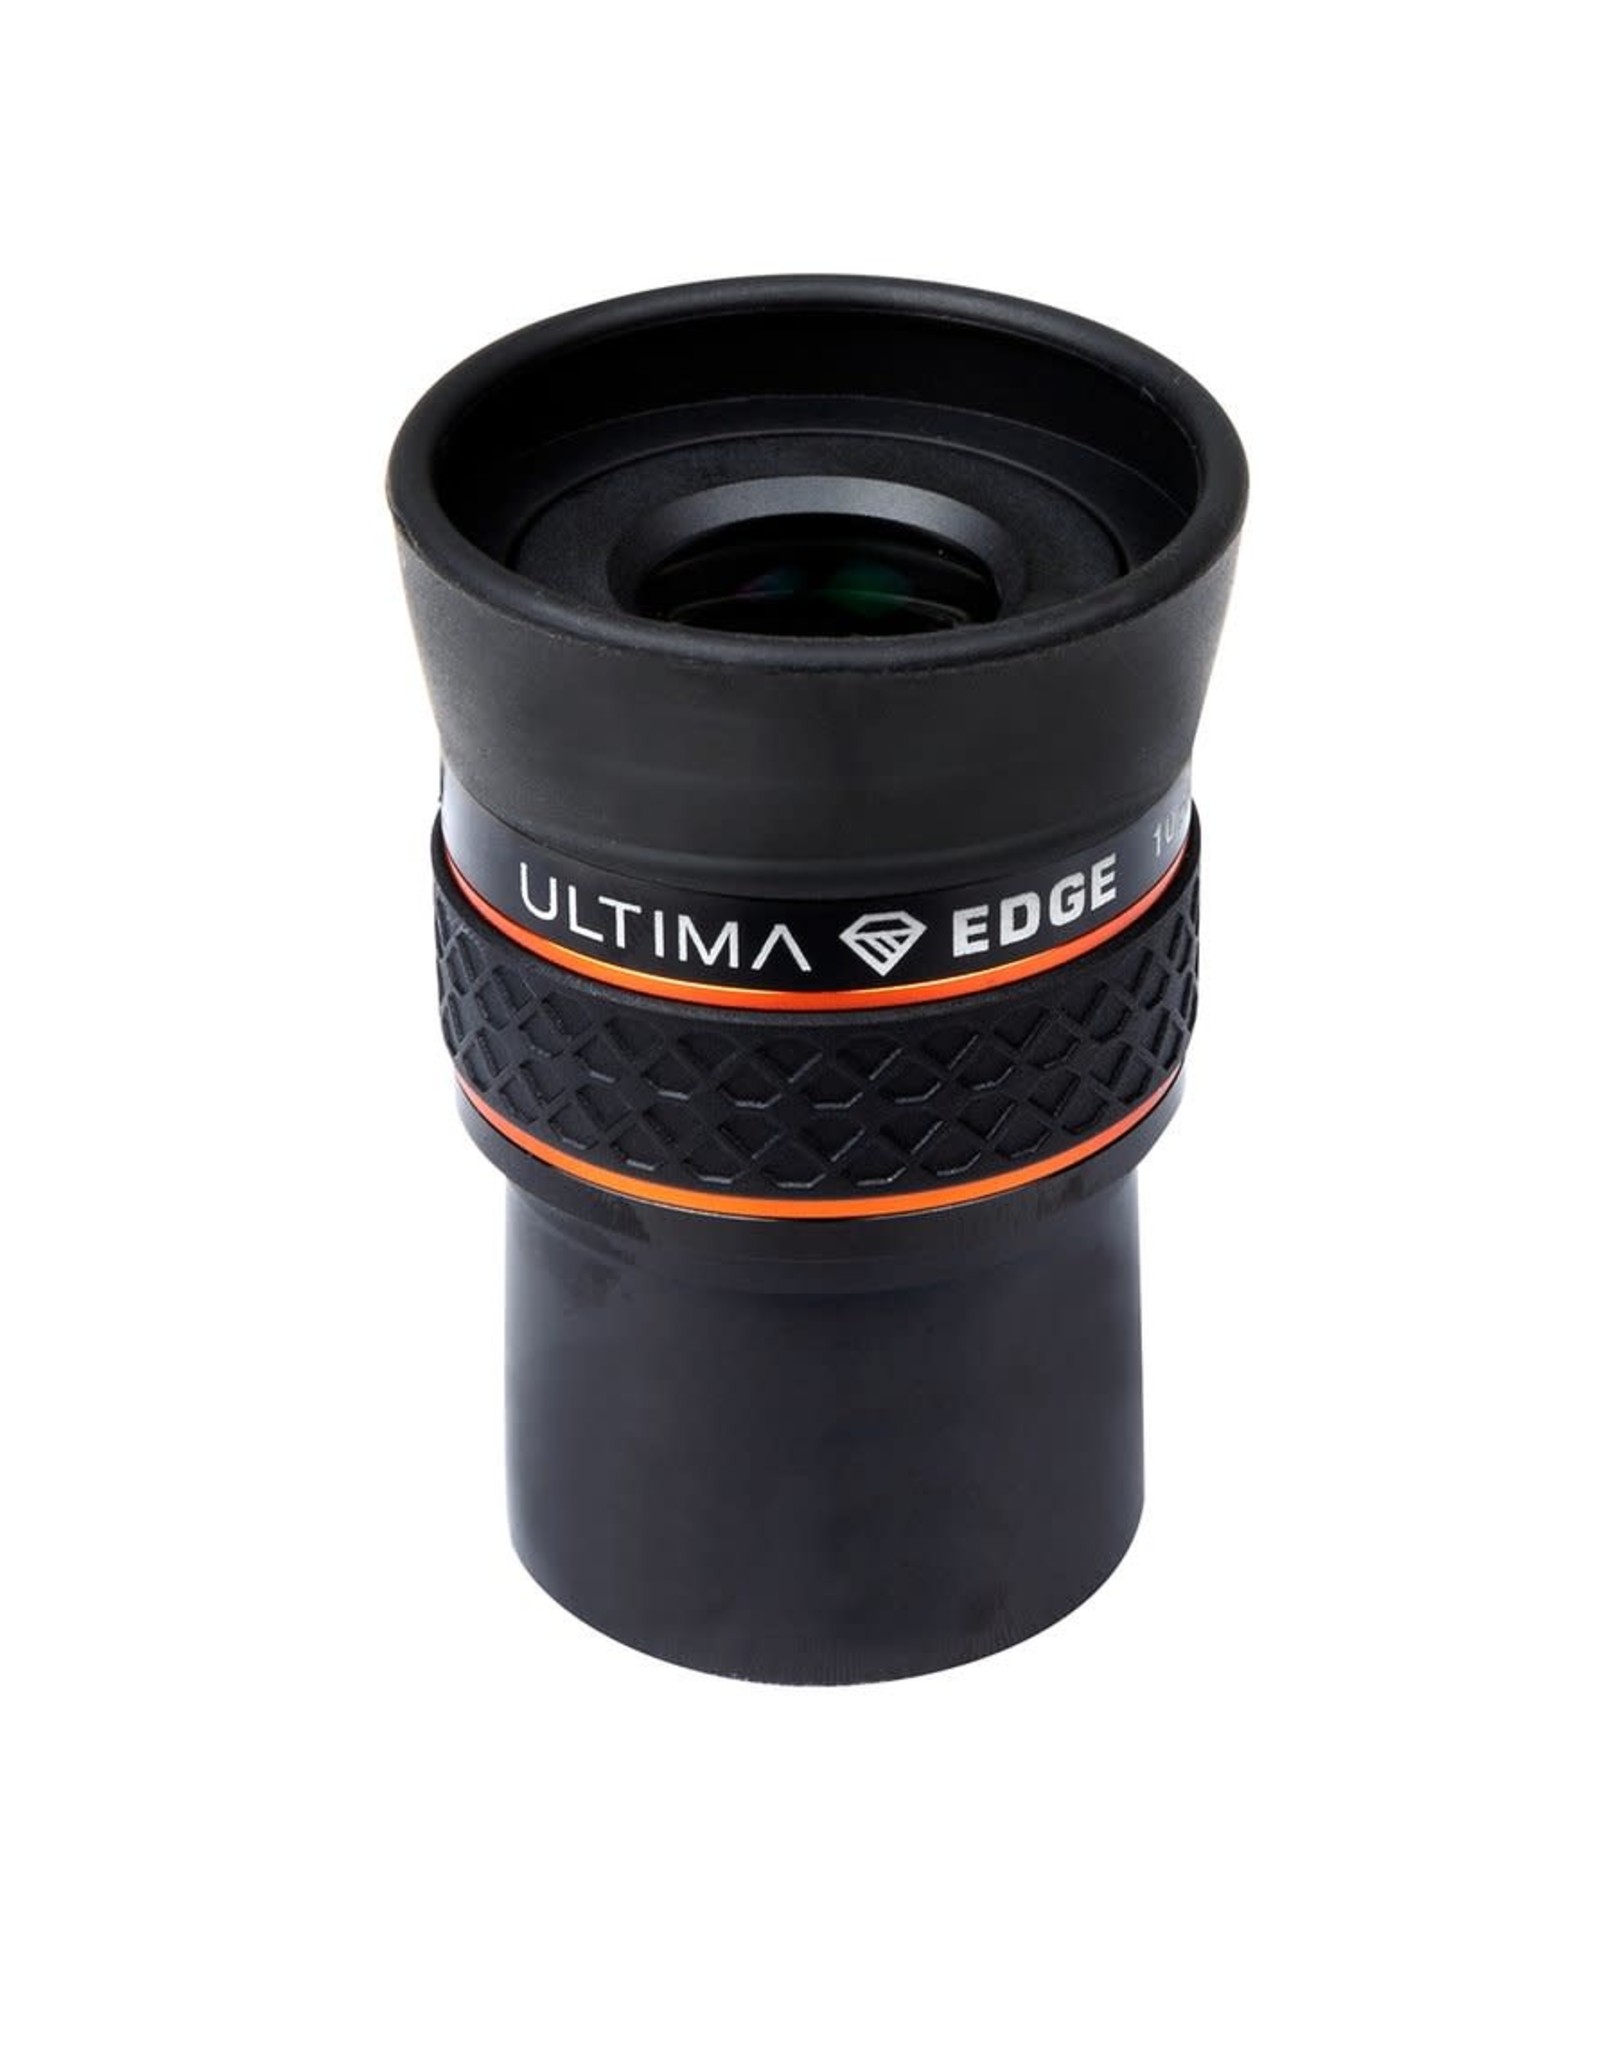 Celestron Celestron Ultima Edge - 10mm Flat Field Eyepiece - 1.25" - 93450